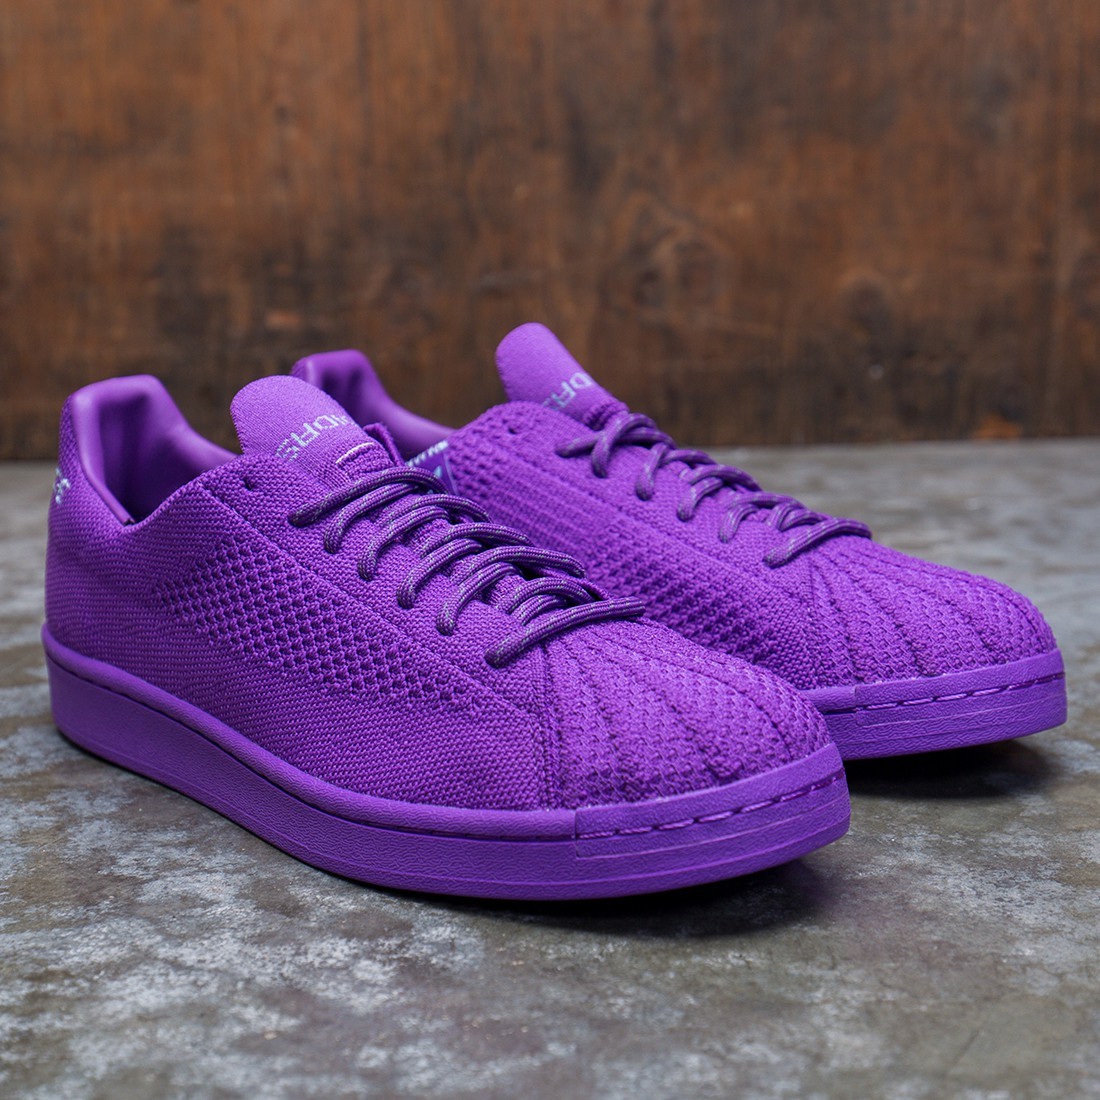 Adidas x Pharrell Williams Men Superstar Primeknit purple active purple ...